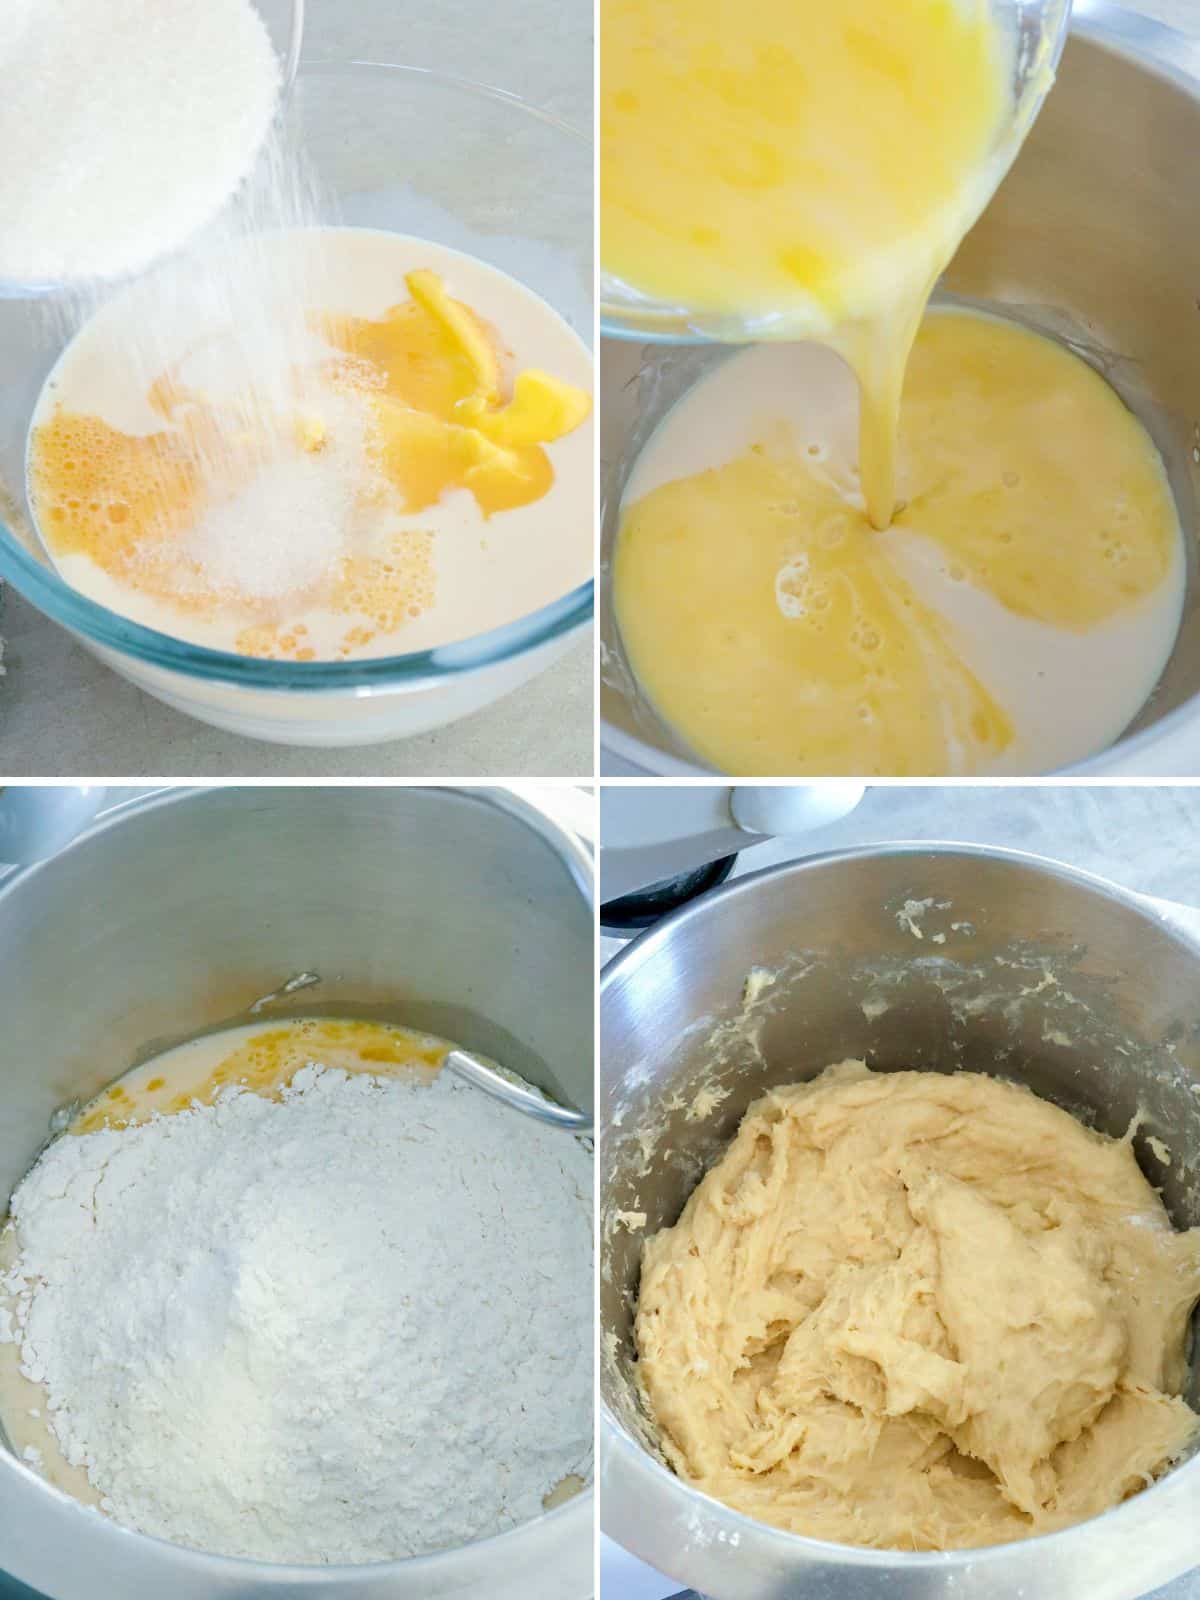 making pandesal dough in a mixer bowl